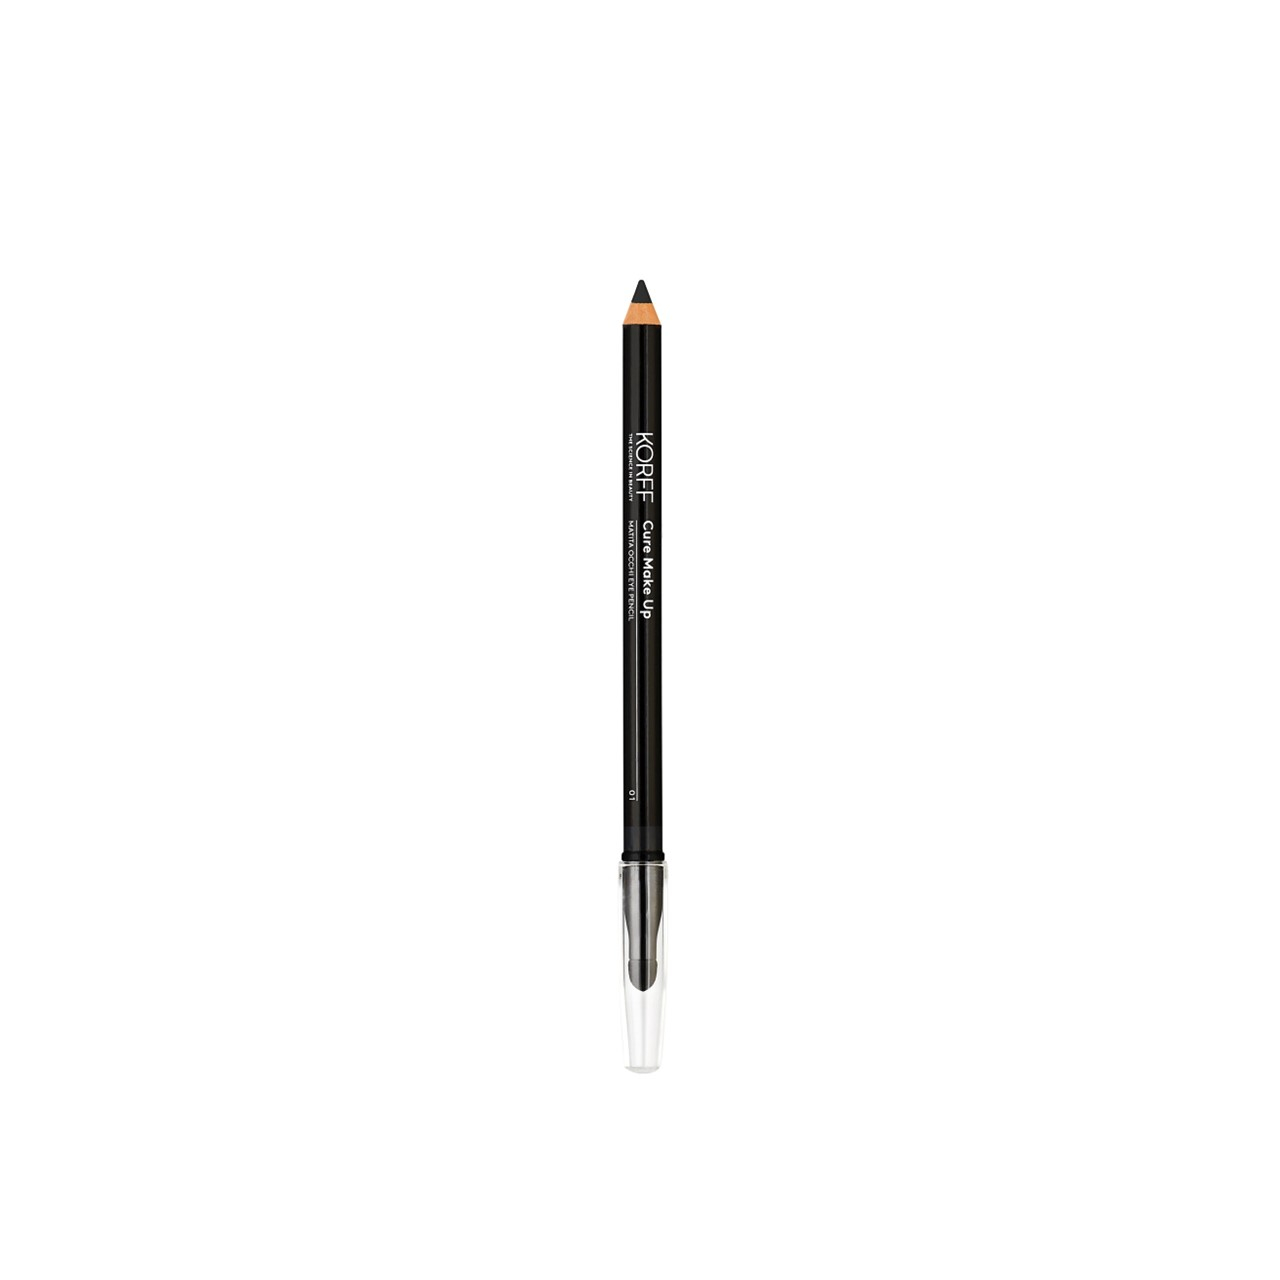 Korff Cure Make-Up Eye Pencil 01 1.1g (0.039 oz)